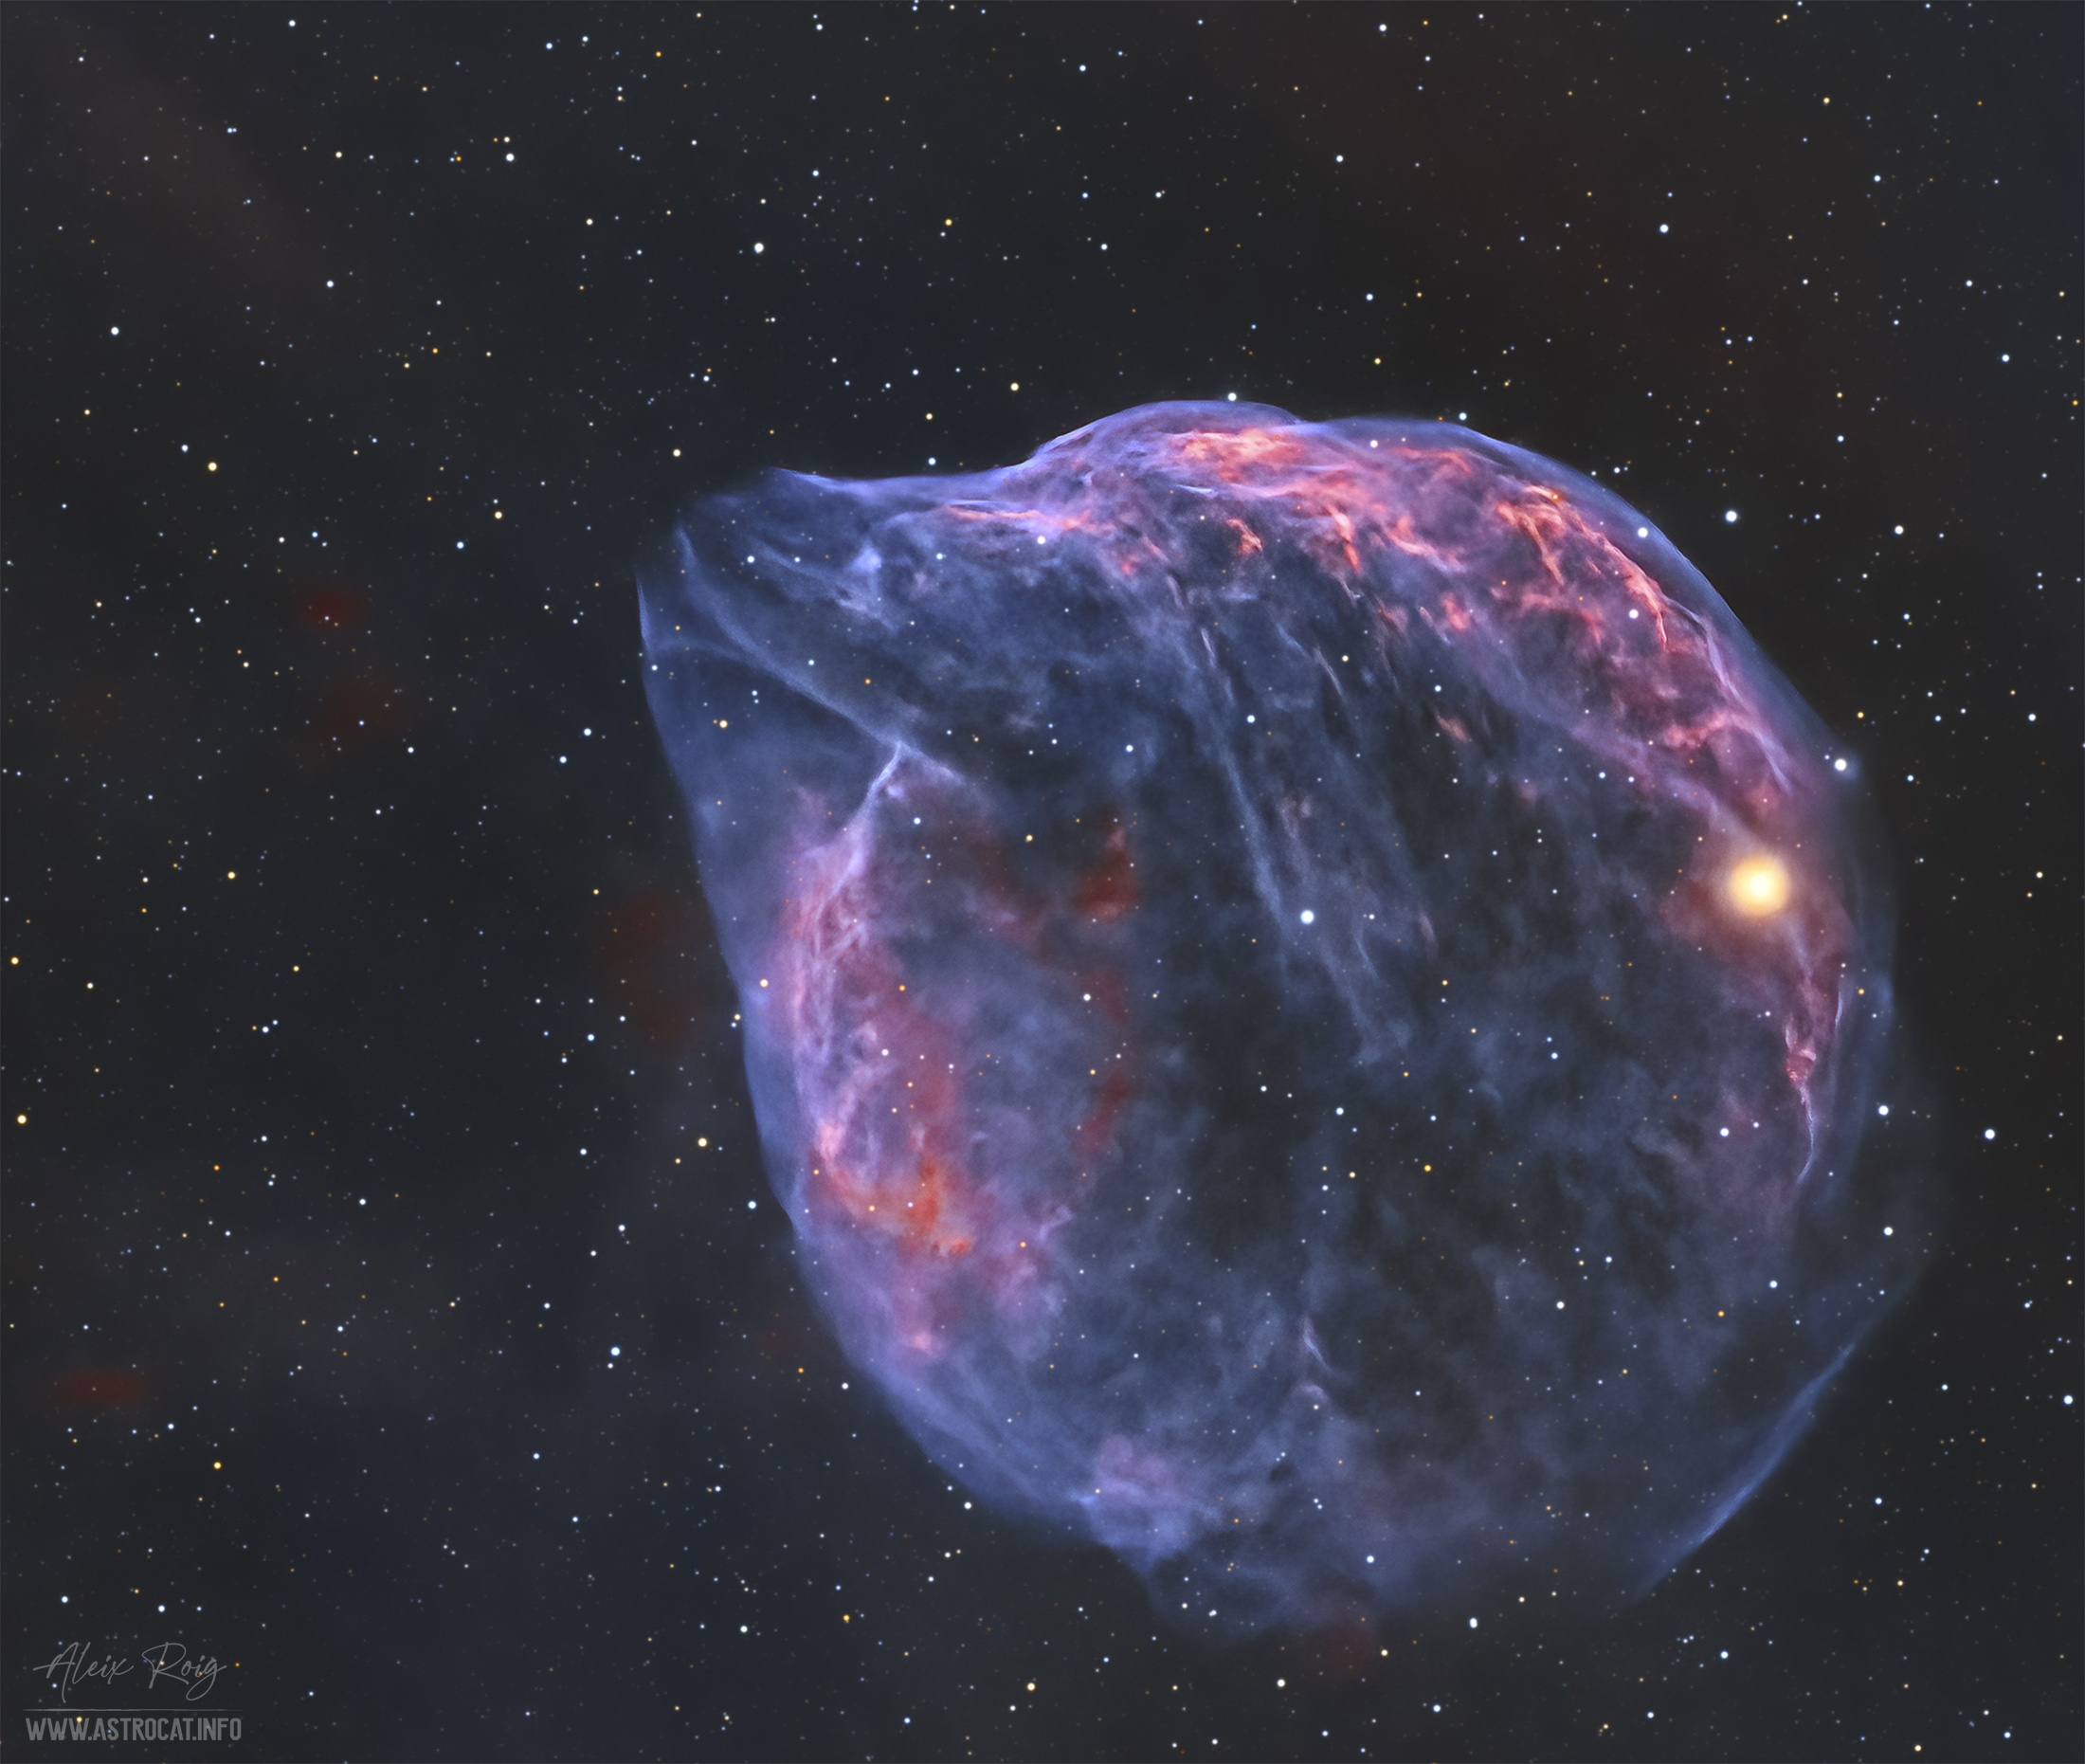 Sharpless-308, the Dolphin Nebula | Astrocat